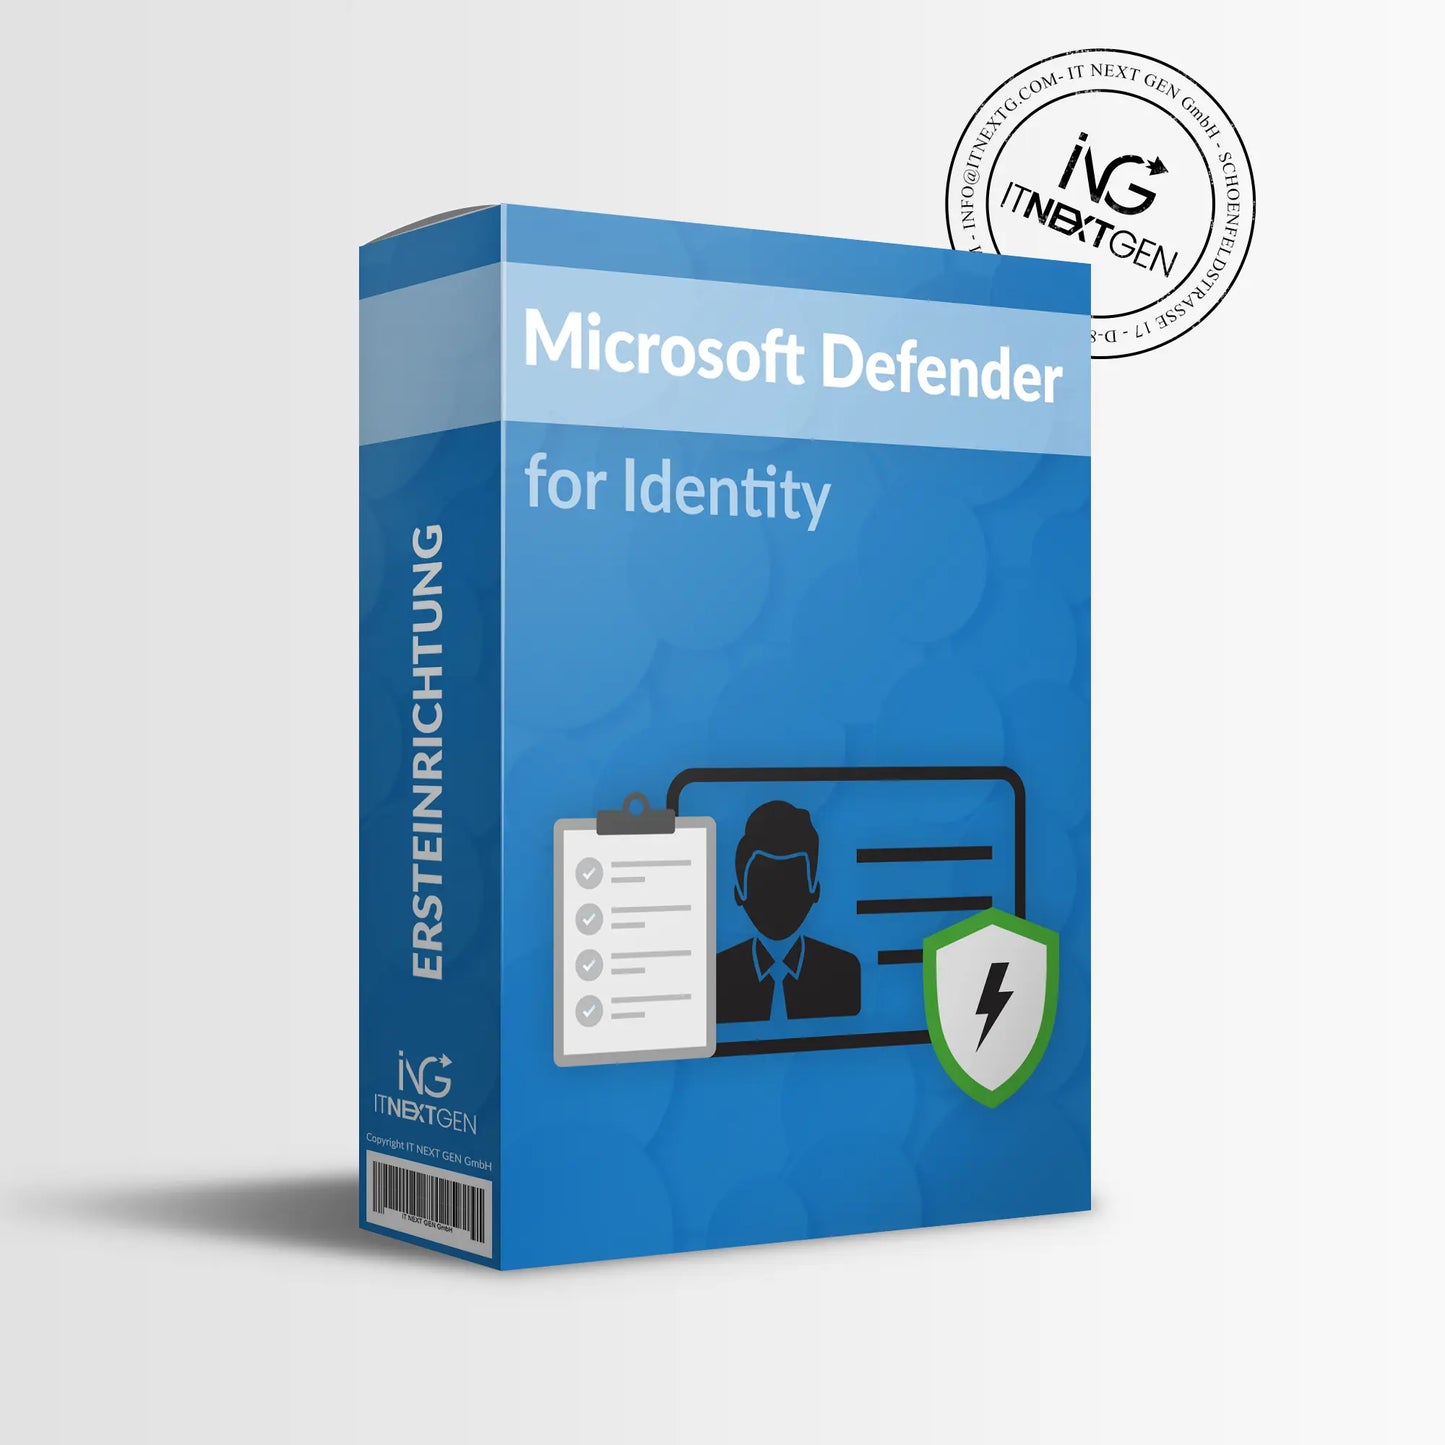 Microsoft Defender for Identity